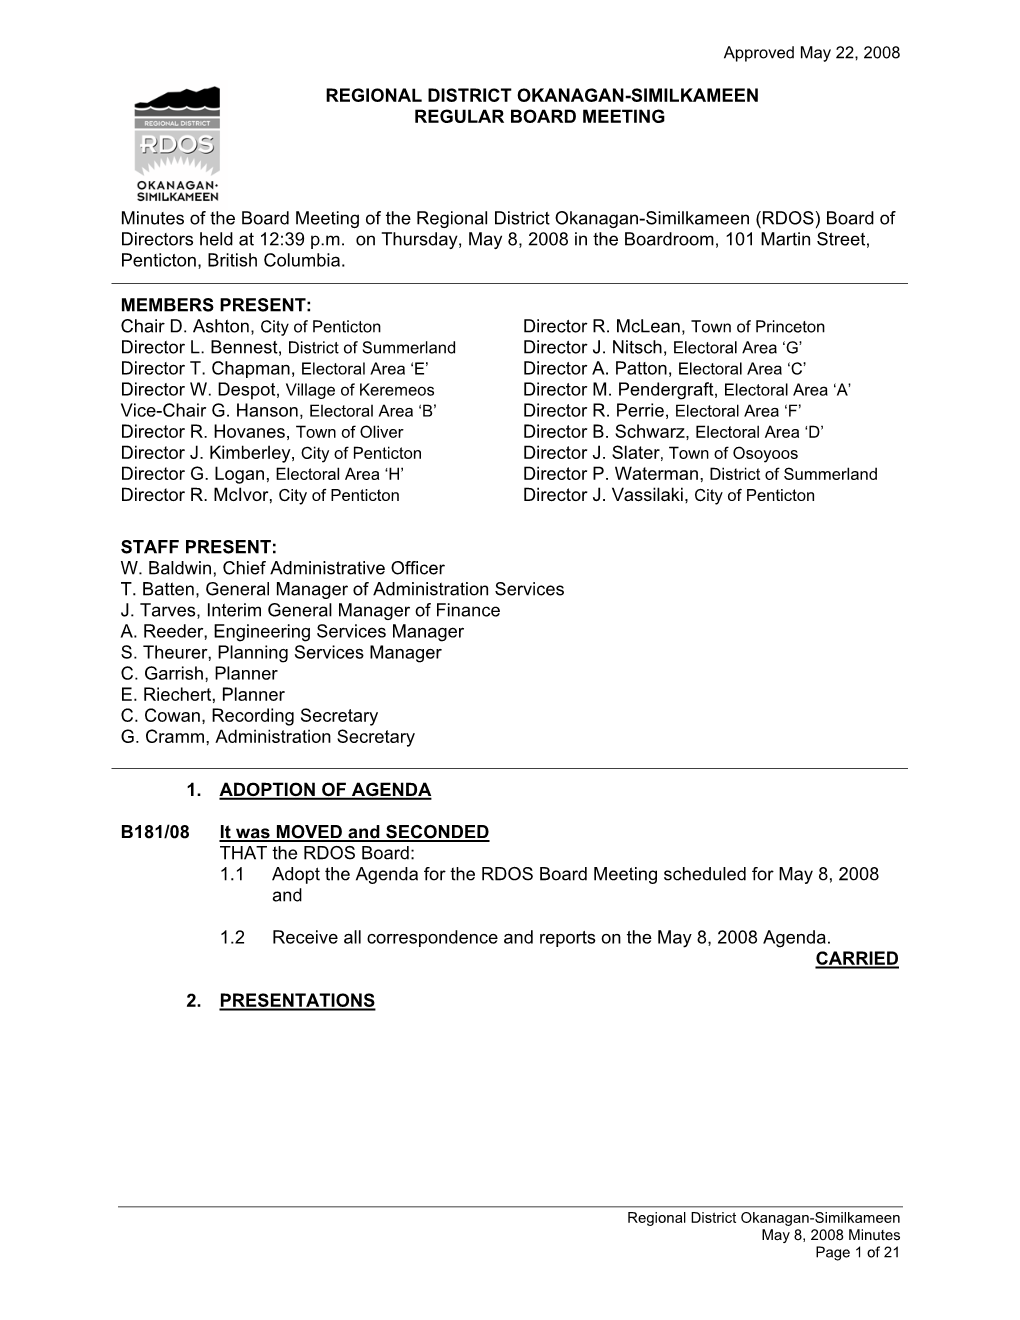 Regional District Okanagan-Similkameen Regular Board Meeting